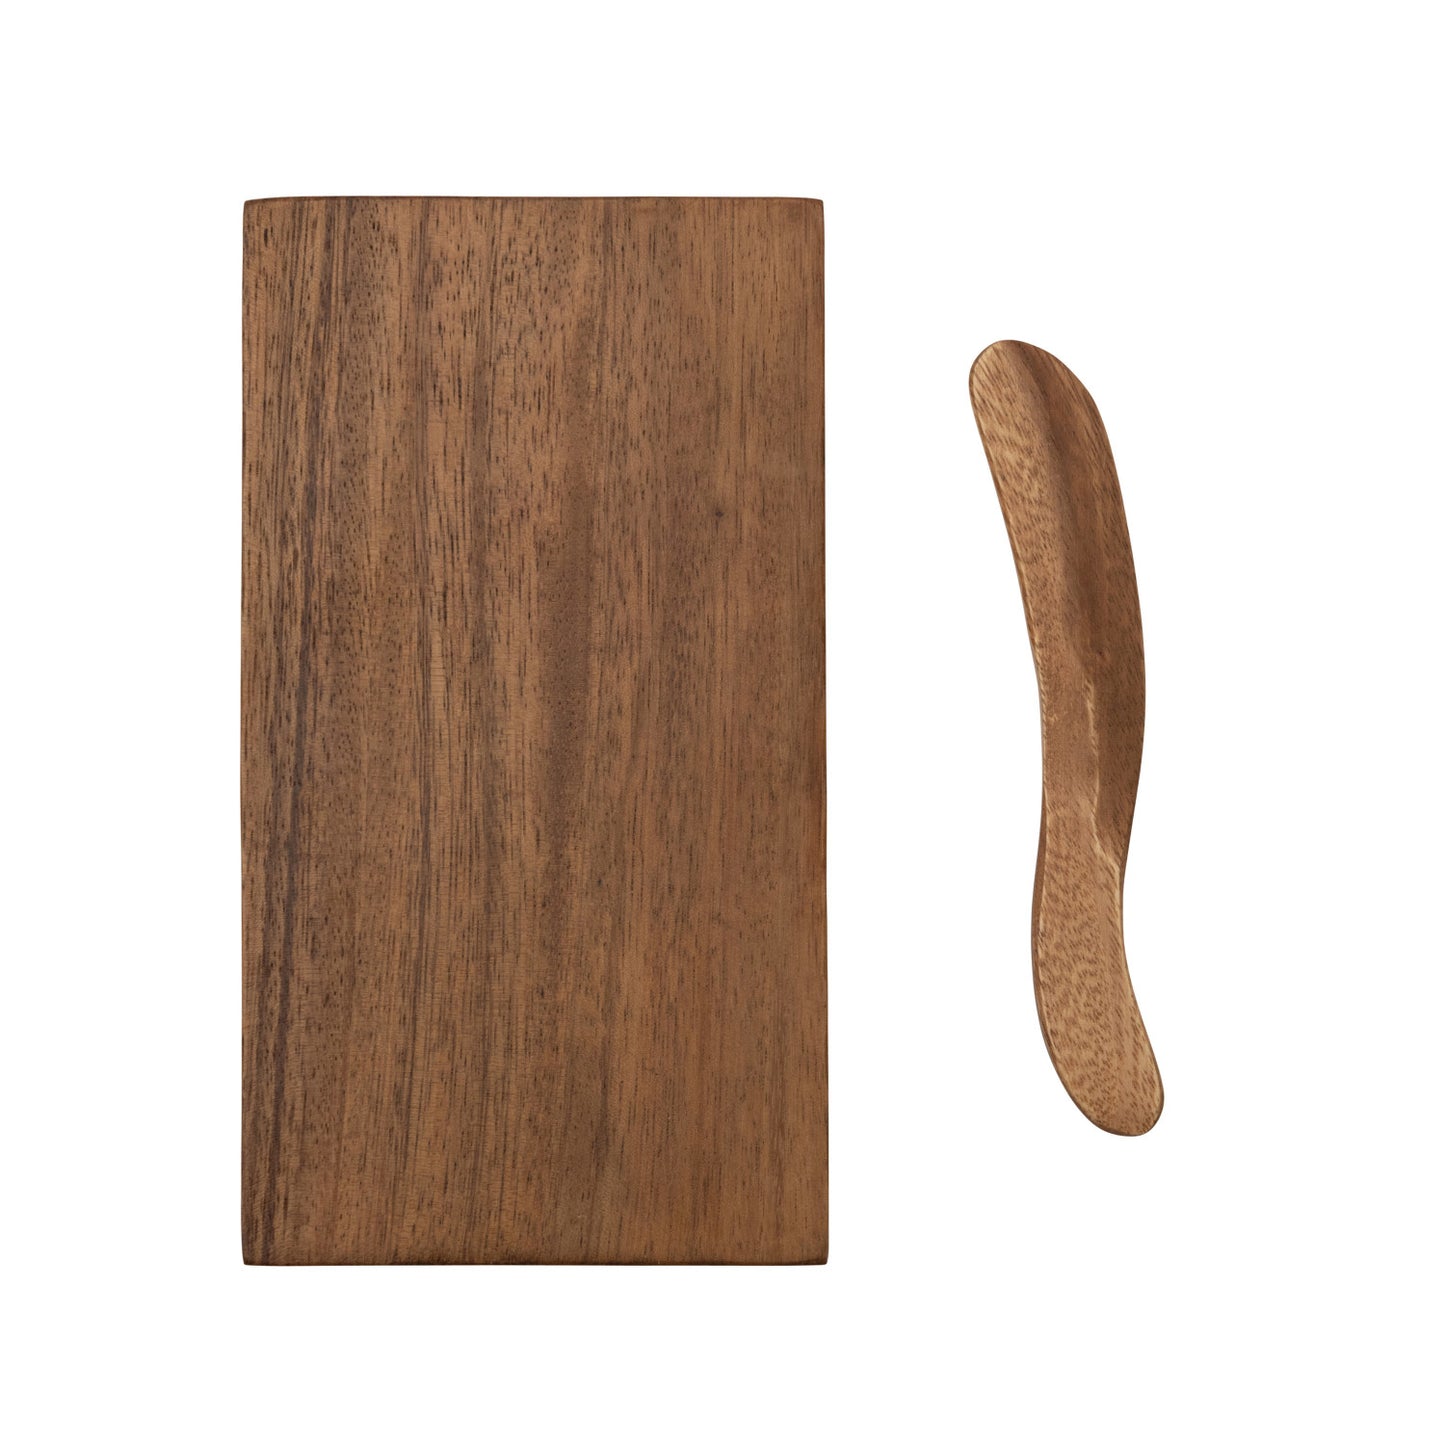 Acacia Wood Cheese/Cutting Board w/ Canape Knife, Set of 2